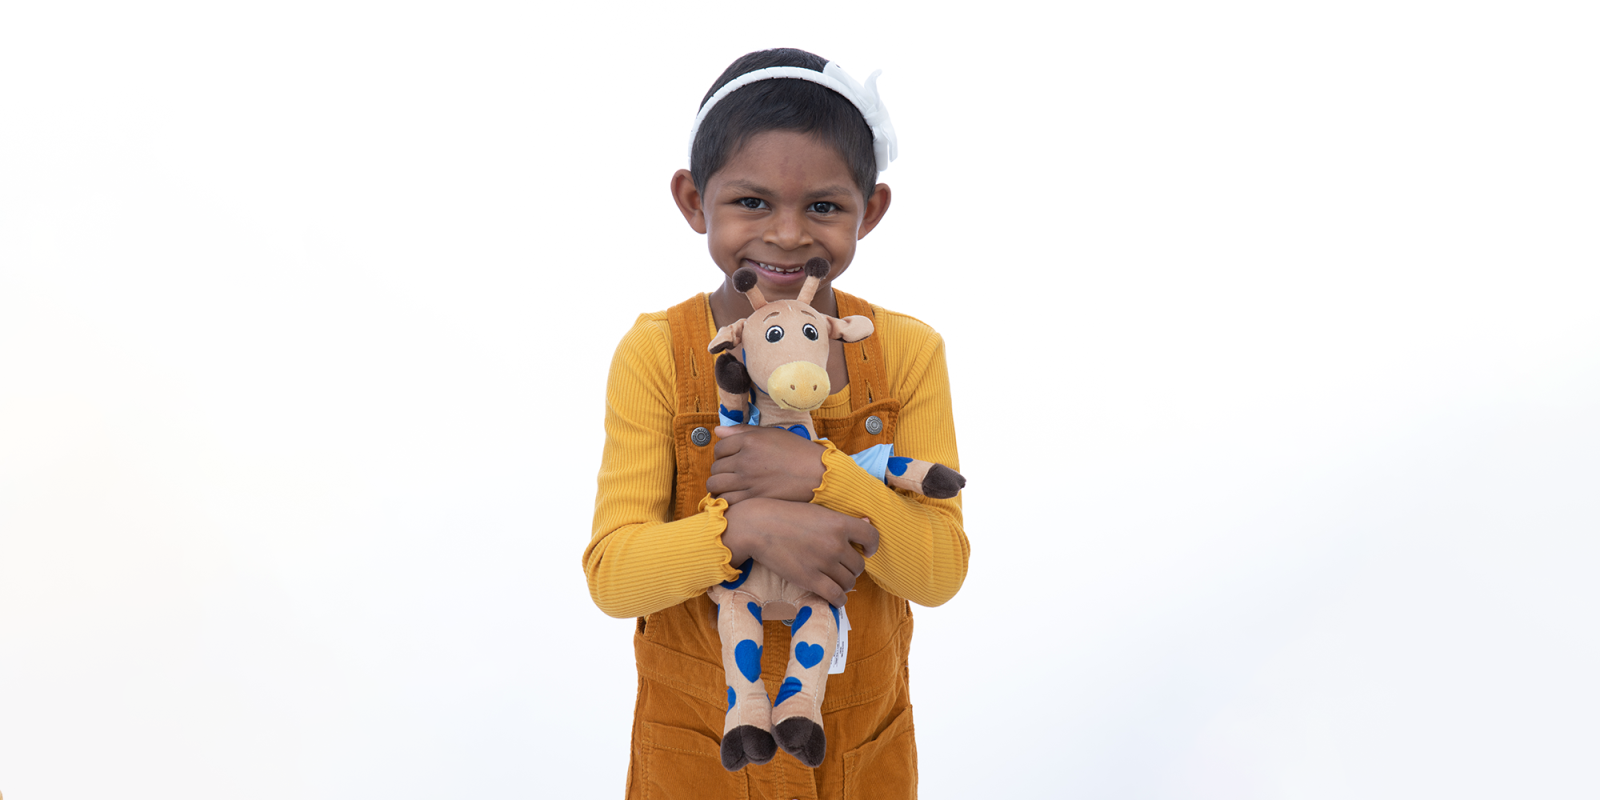 Meet Olivia – Valley Children’s Kids Day Ambassador for 2022!